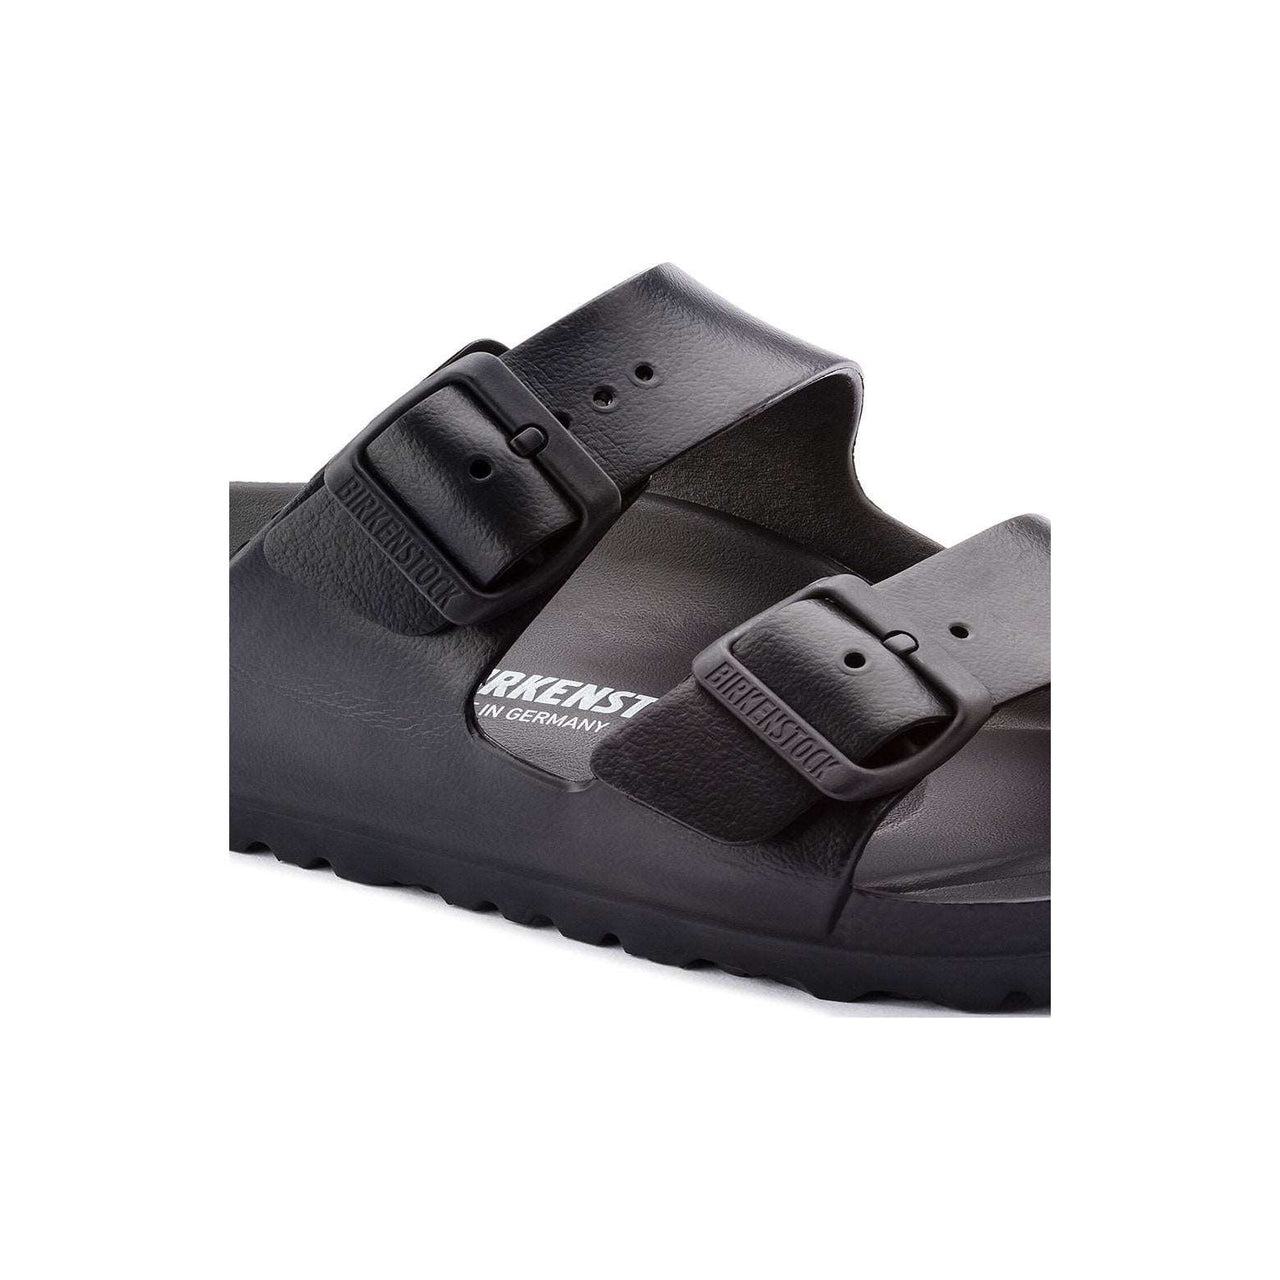 (0129423) Arizona EVA Sandals - Black